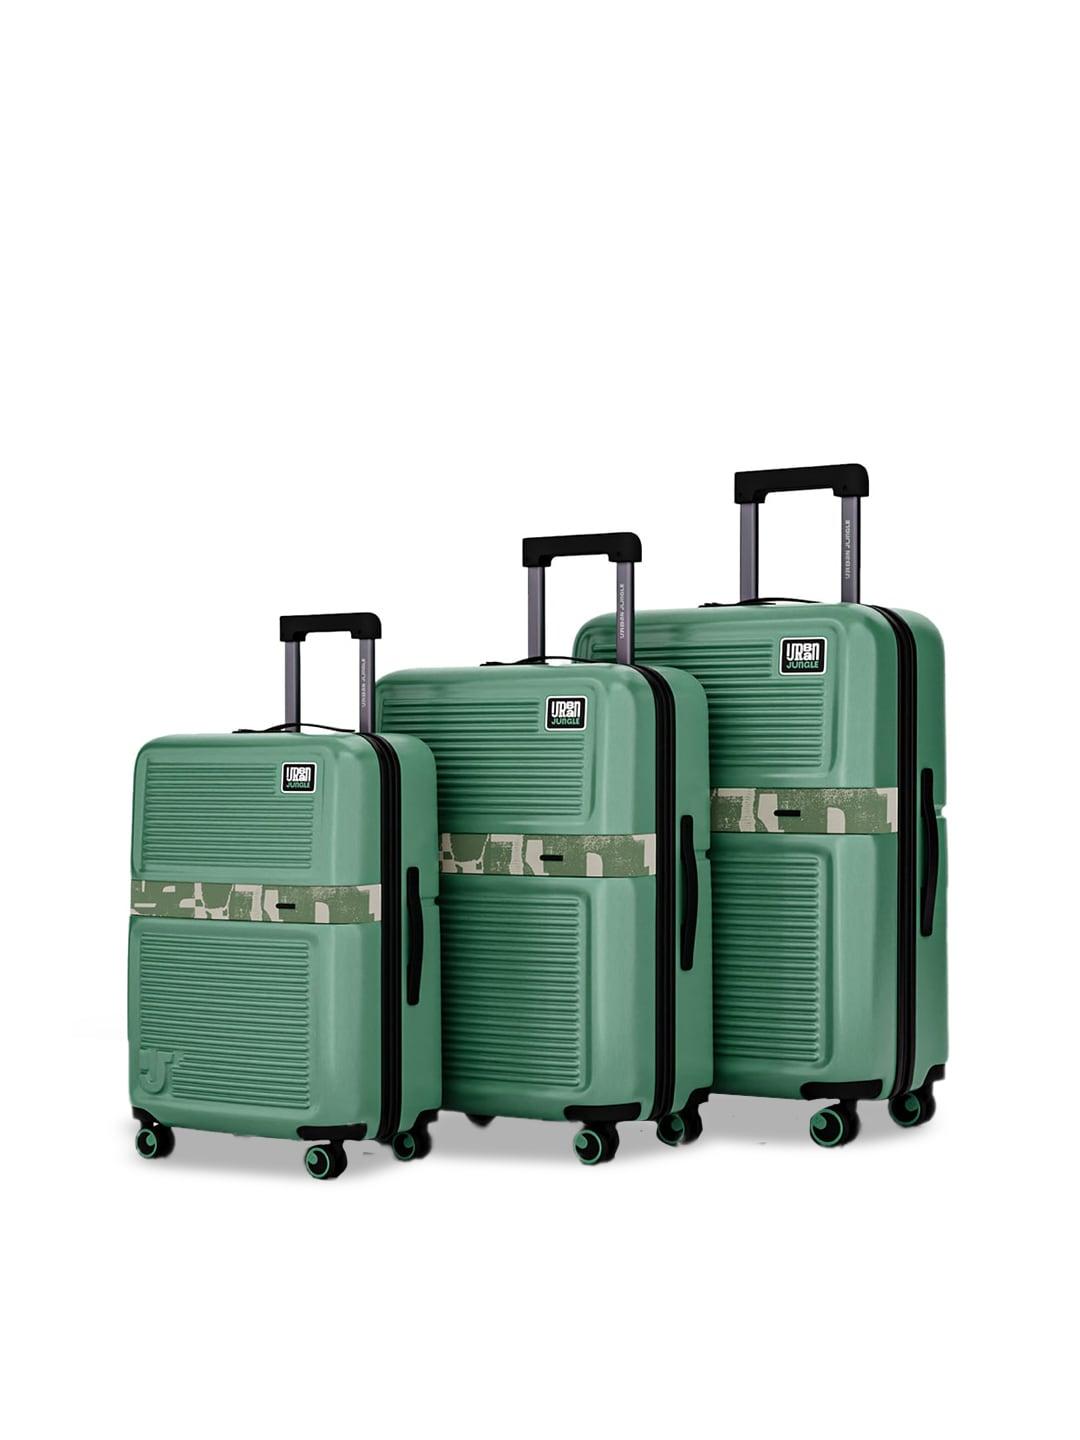 urban jungle set of 3 olive green hard luggage trolley